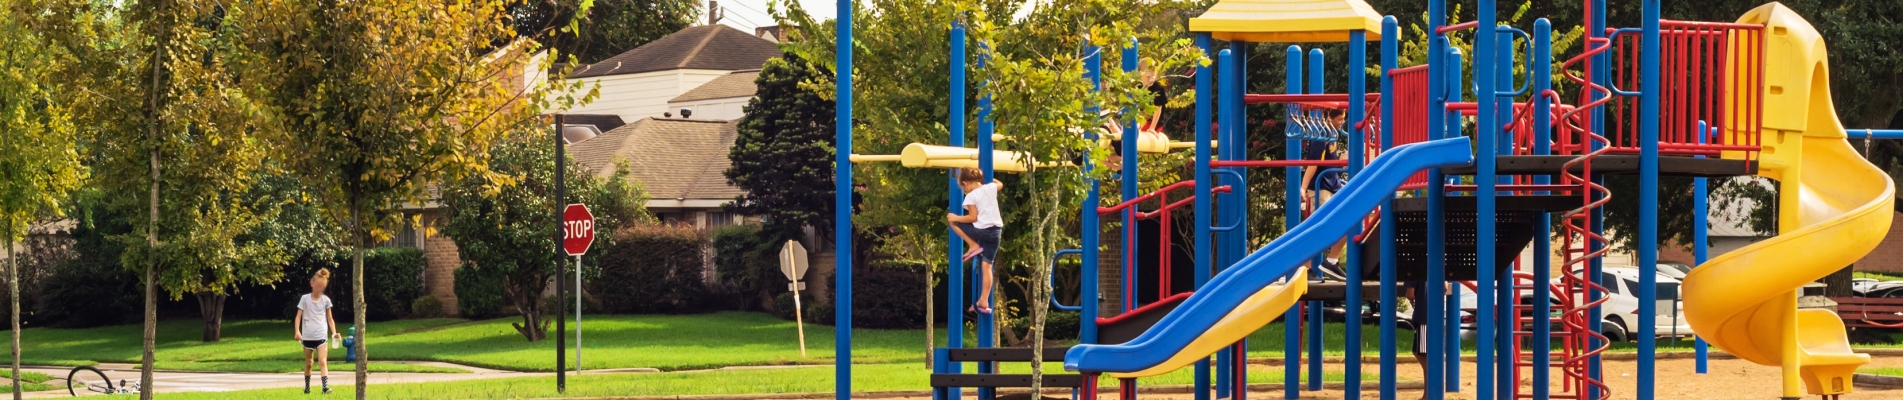 Intego Playground